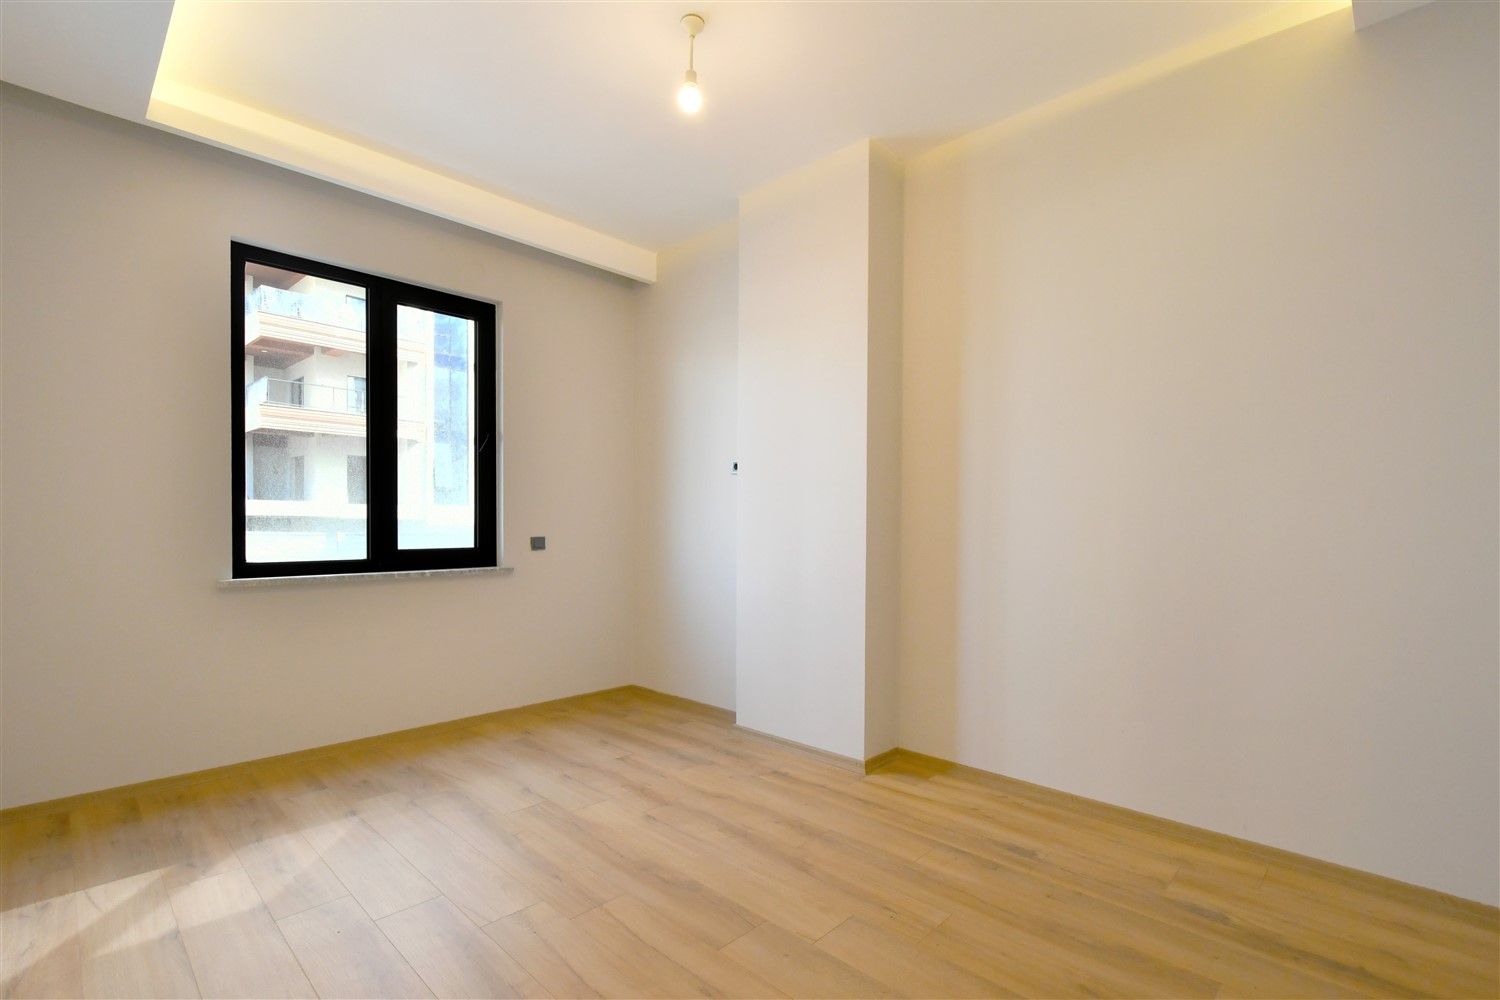 New 2+1 apartments in a popular location in Mahmutlar